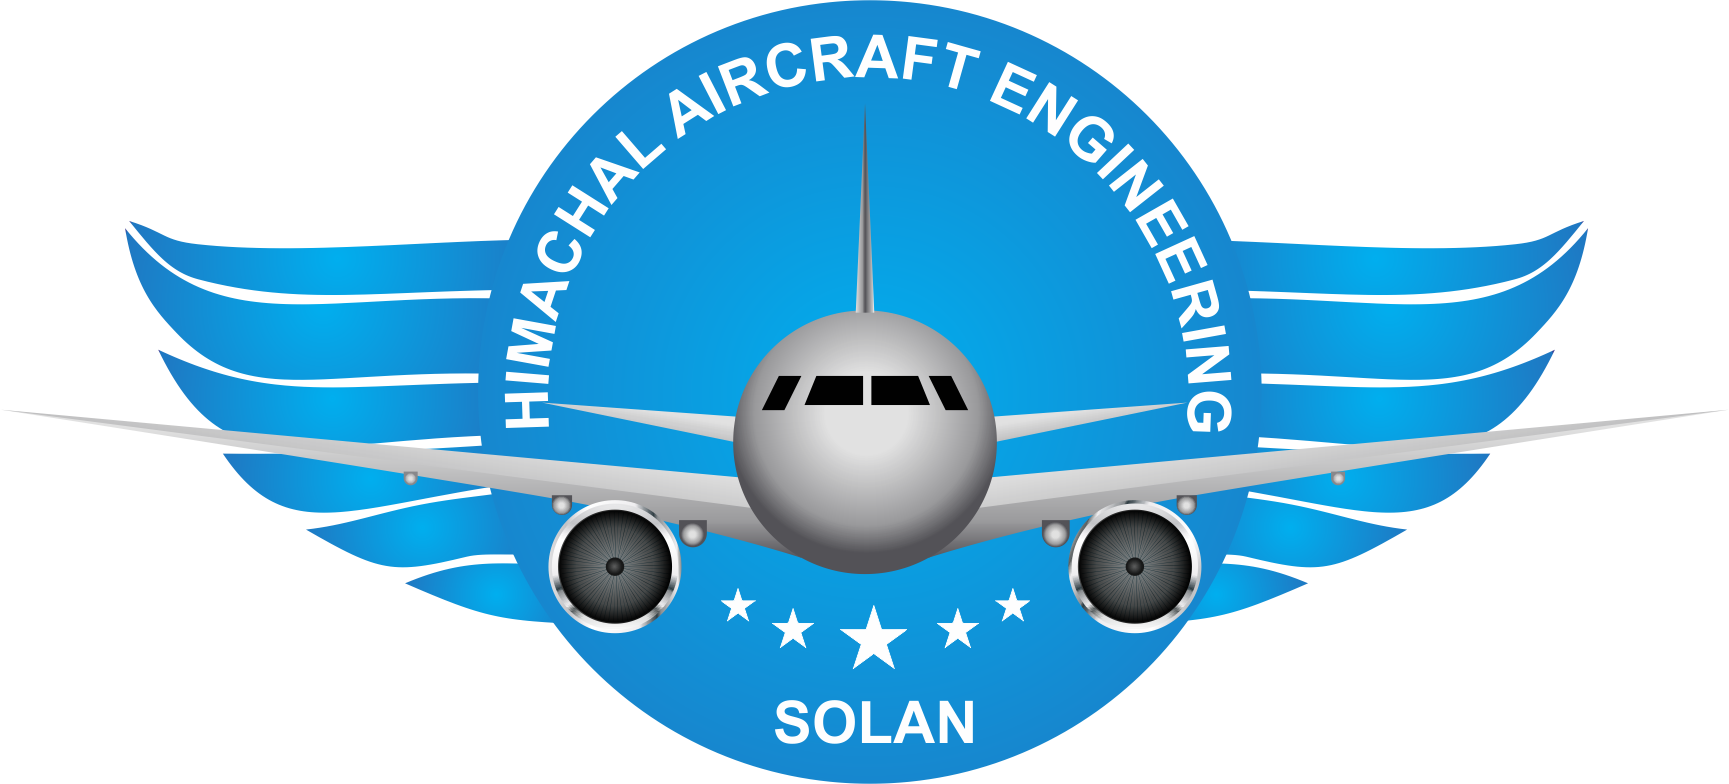 engineering clipart aeronautical engineer